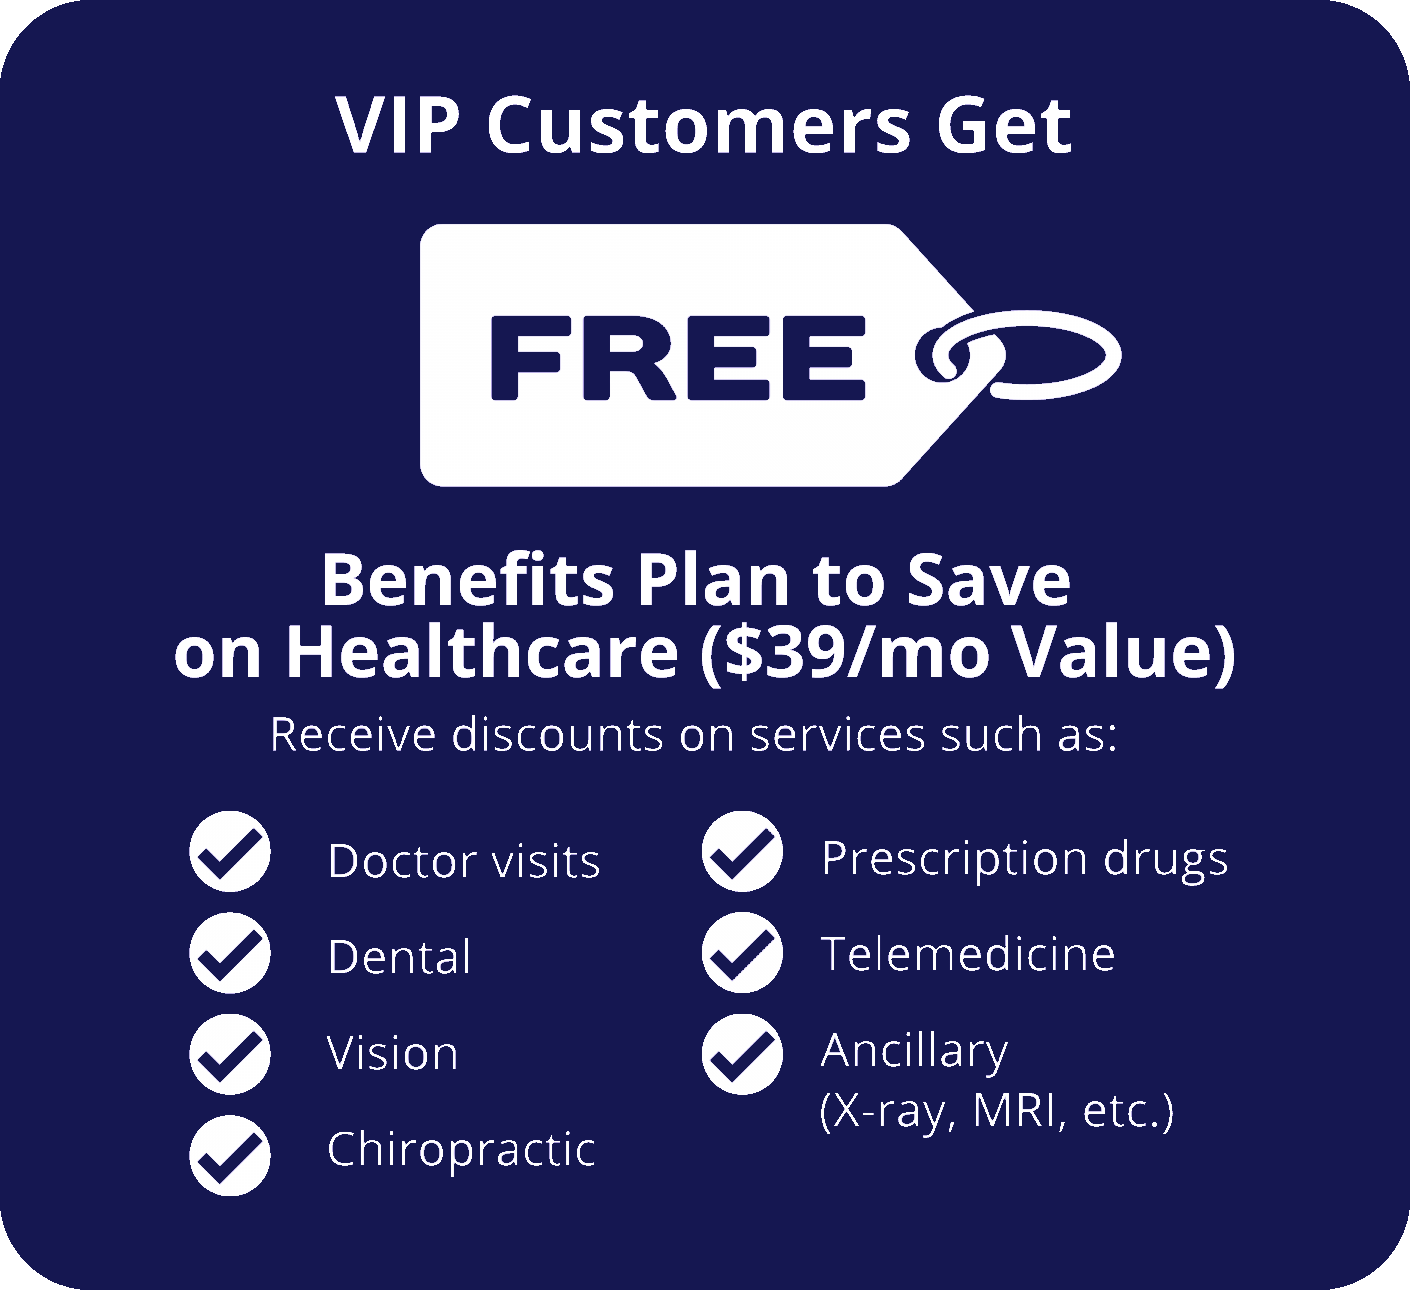 VIP customers get free healthcare discounts